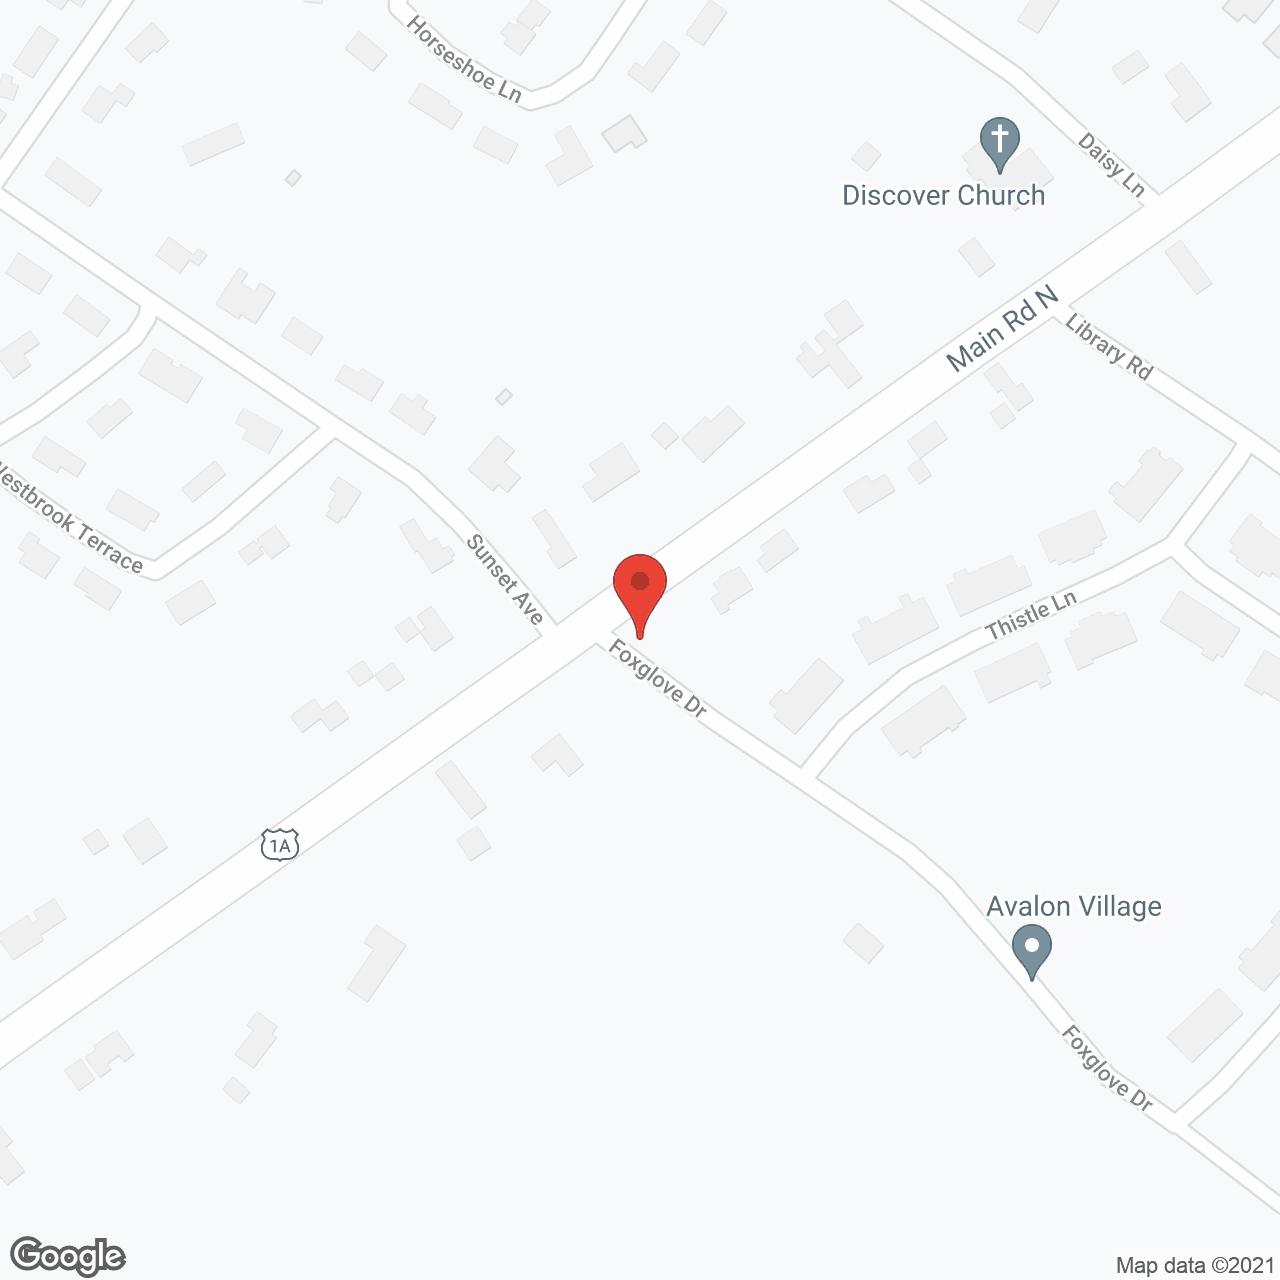 Avalon Village in google map